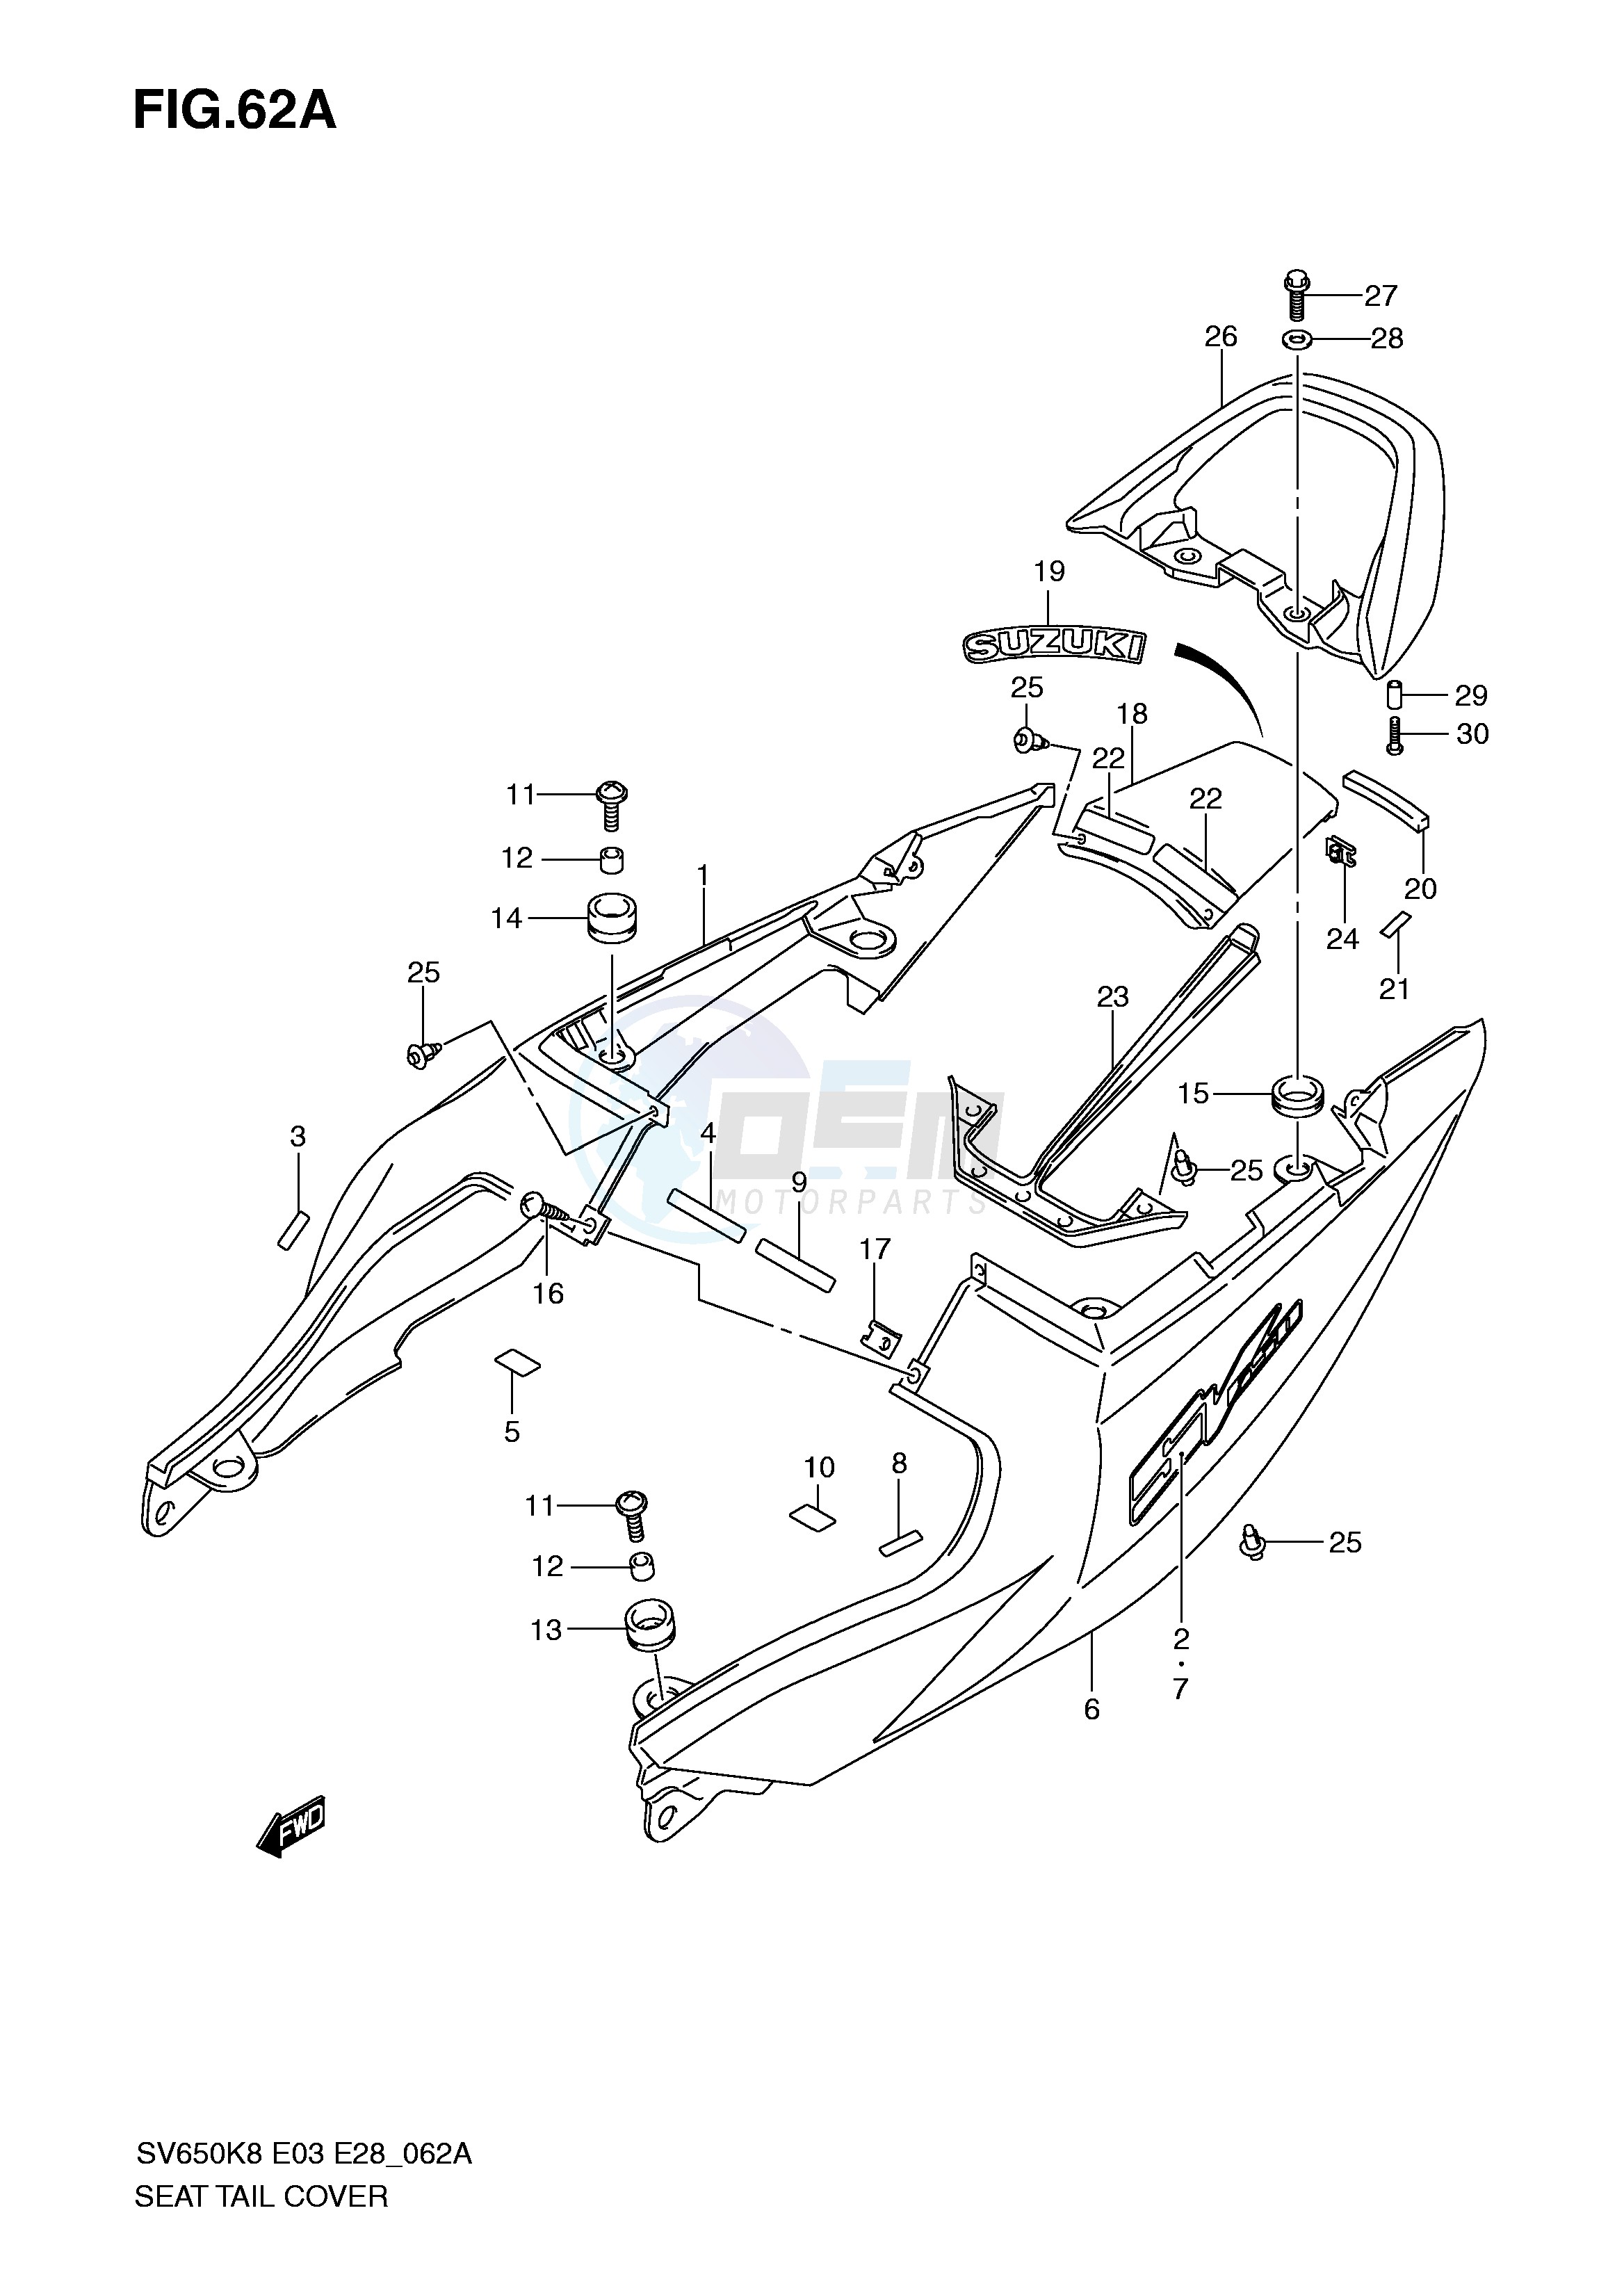 SEAT TAIL COVER (SV650K9 AK9) blueprint